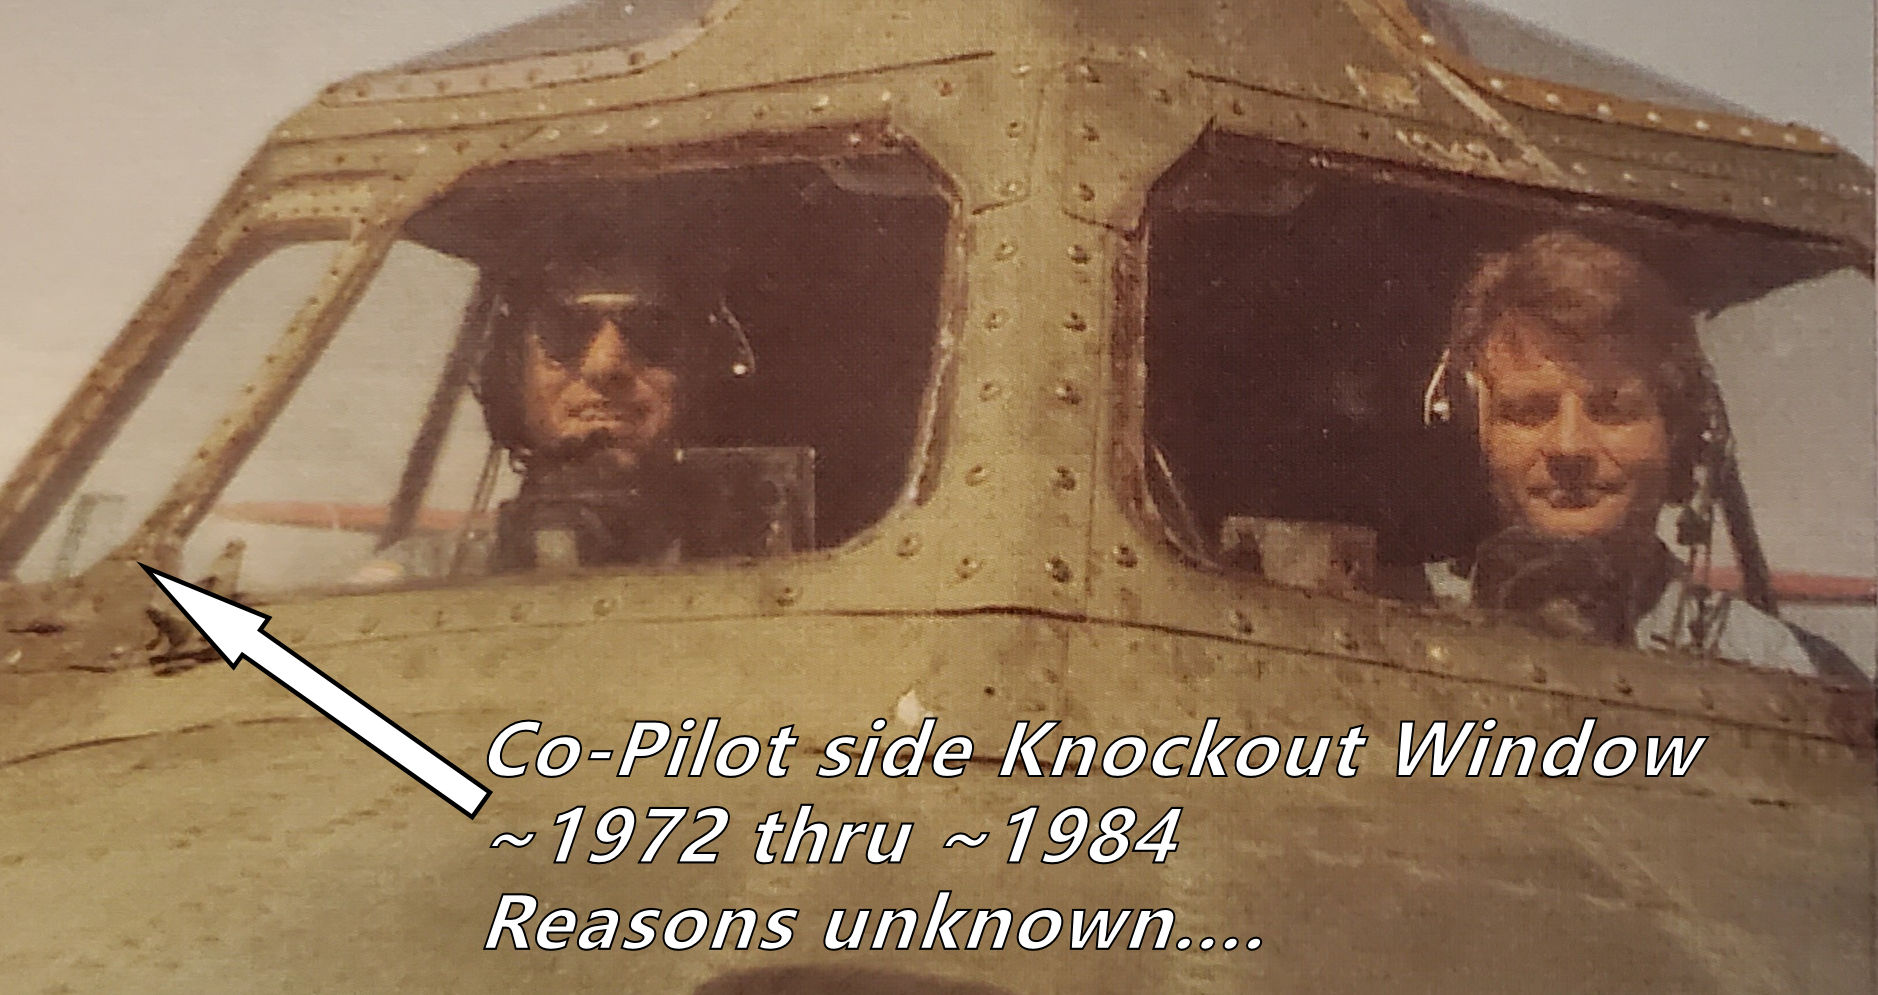 Co-Pilot side knockout window